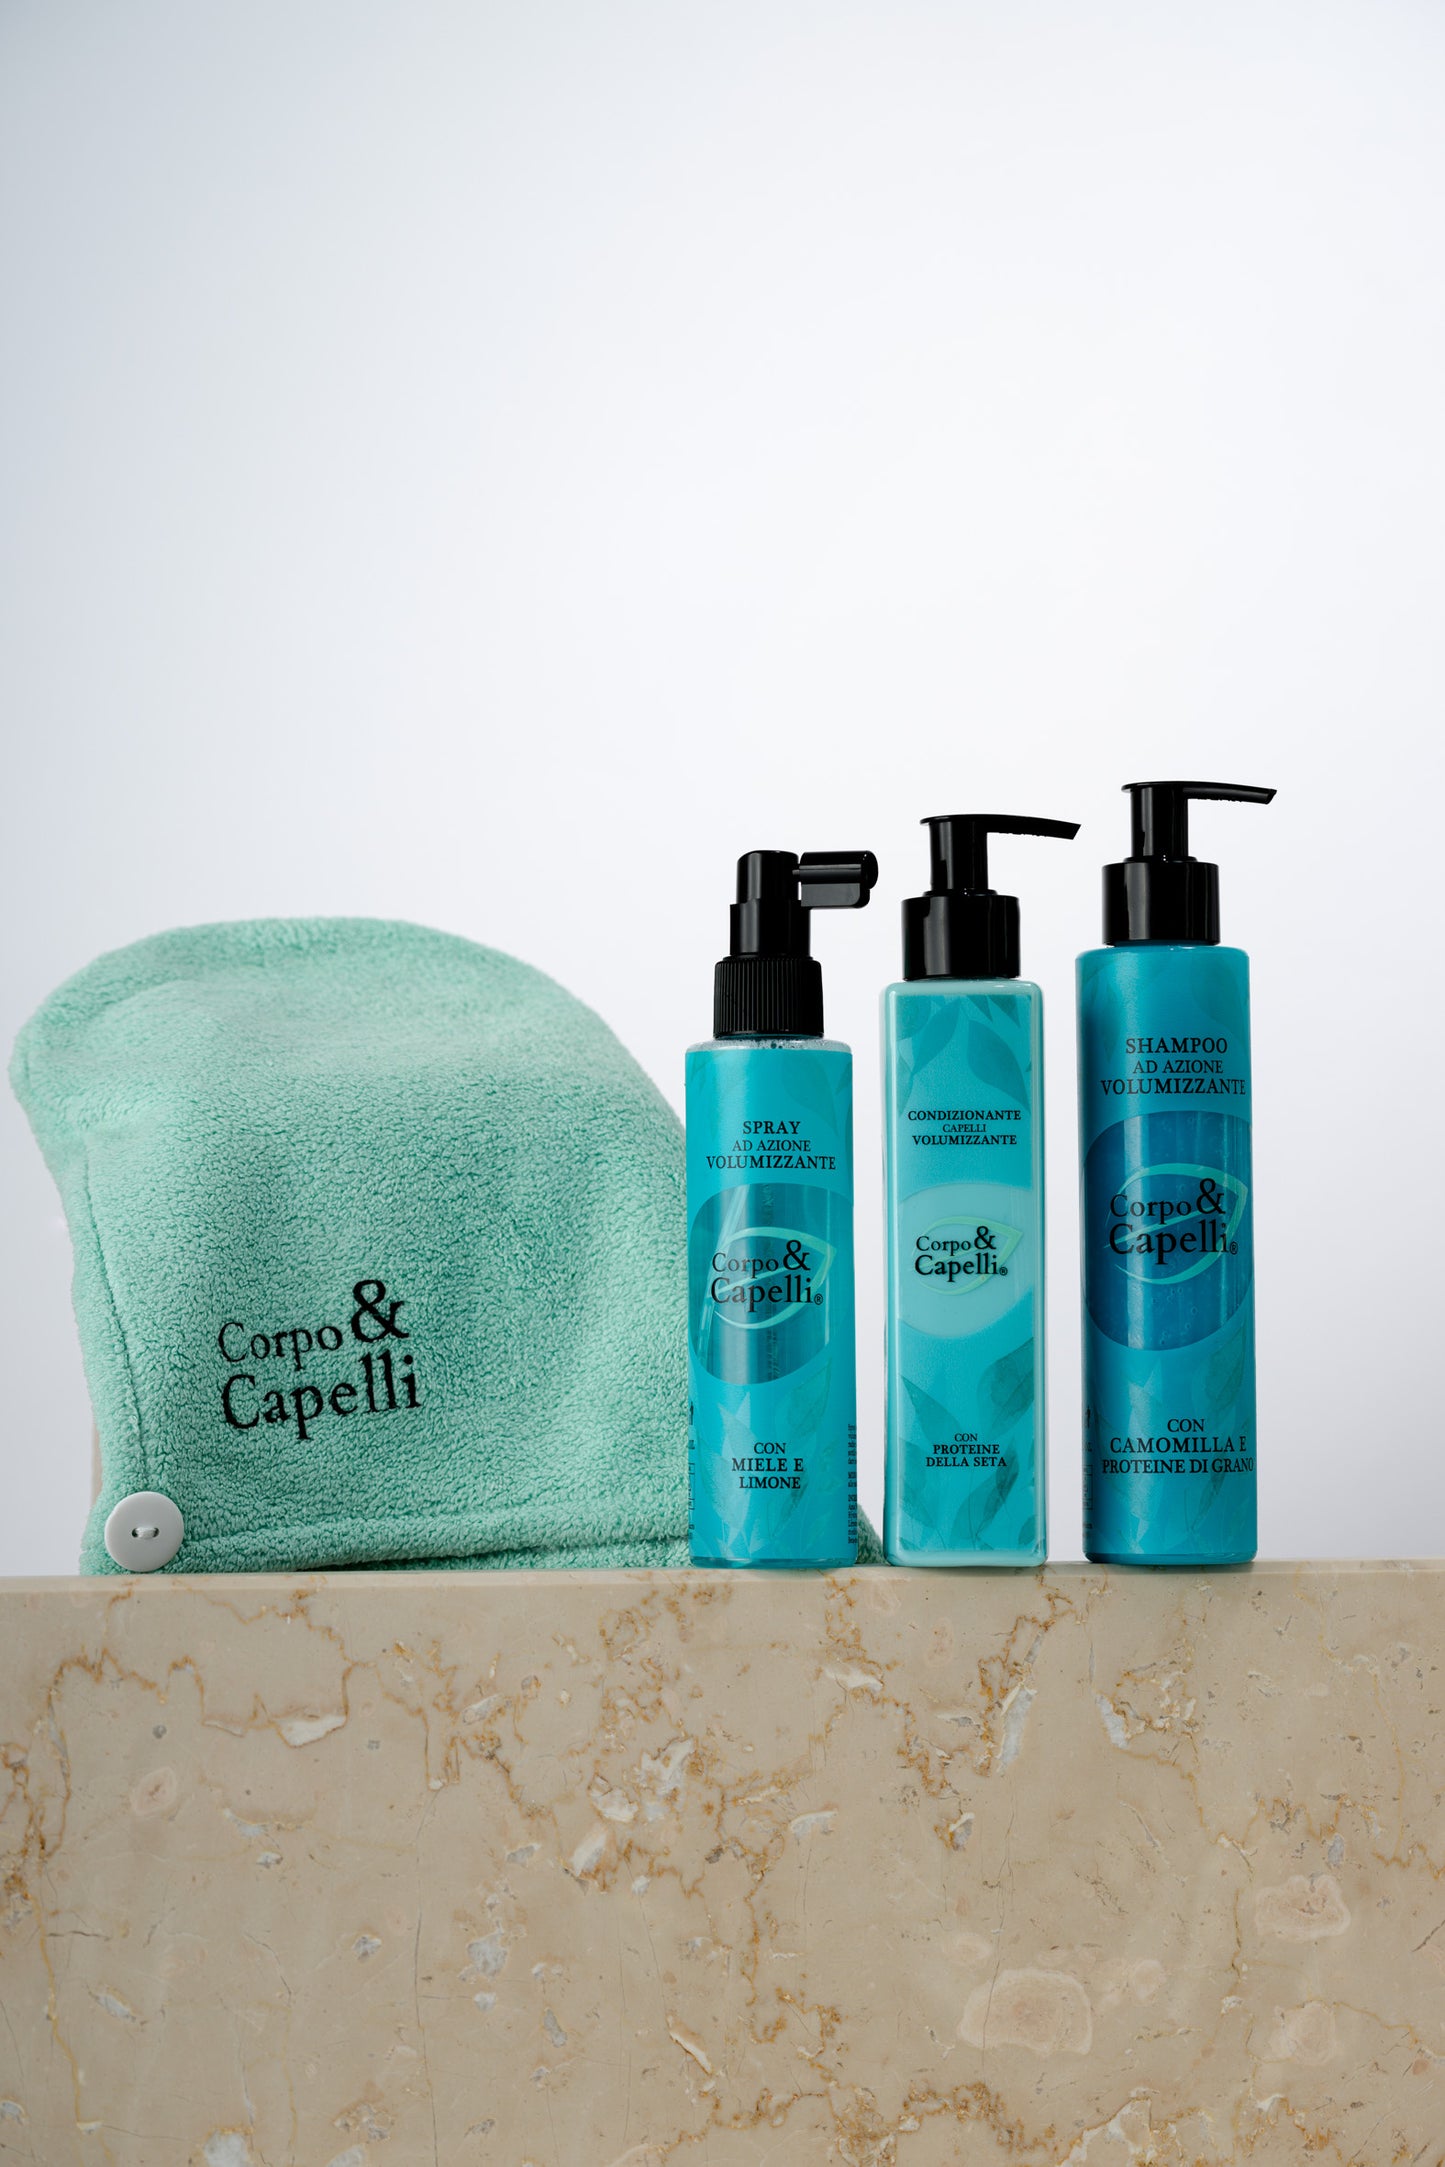 Kit shampoo, condizionante e spray linea volume